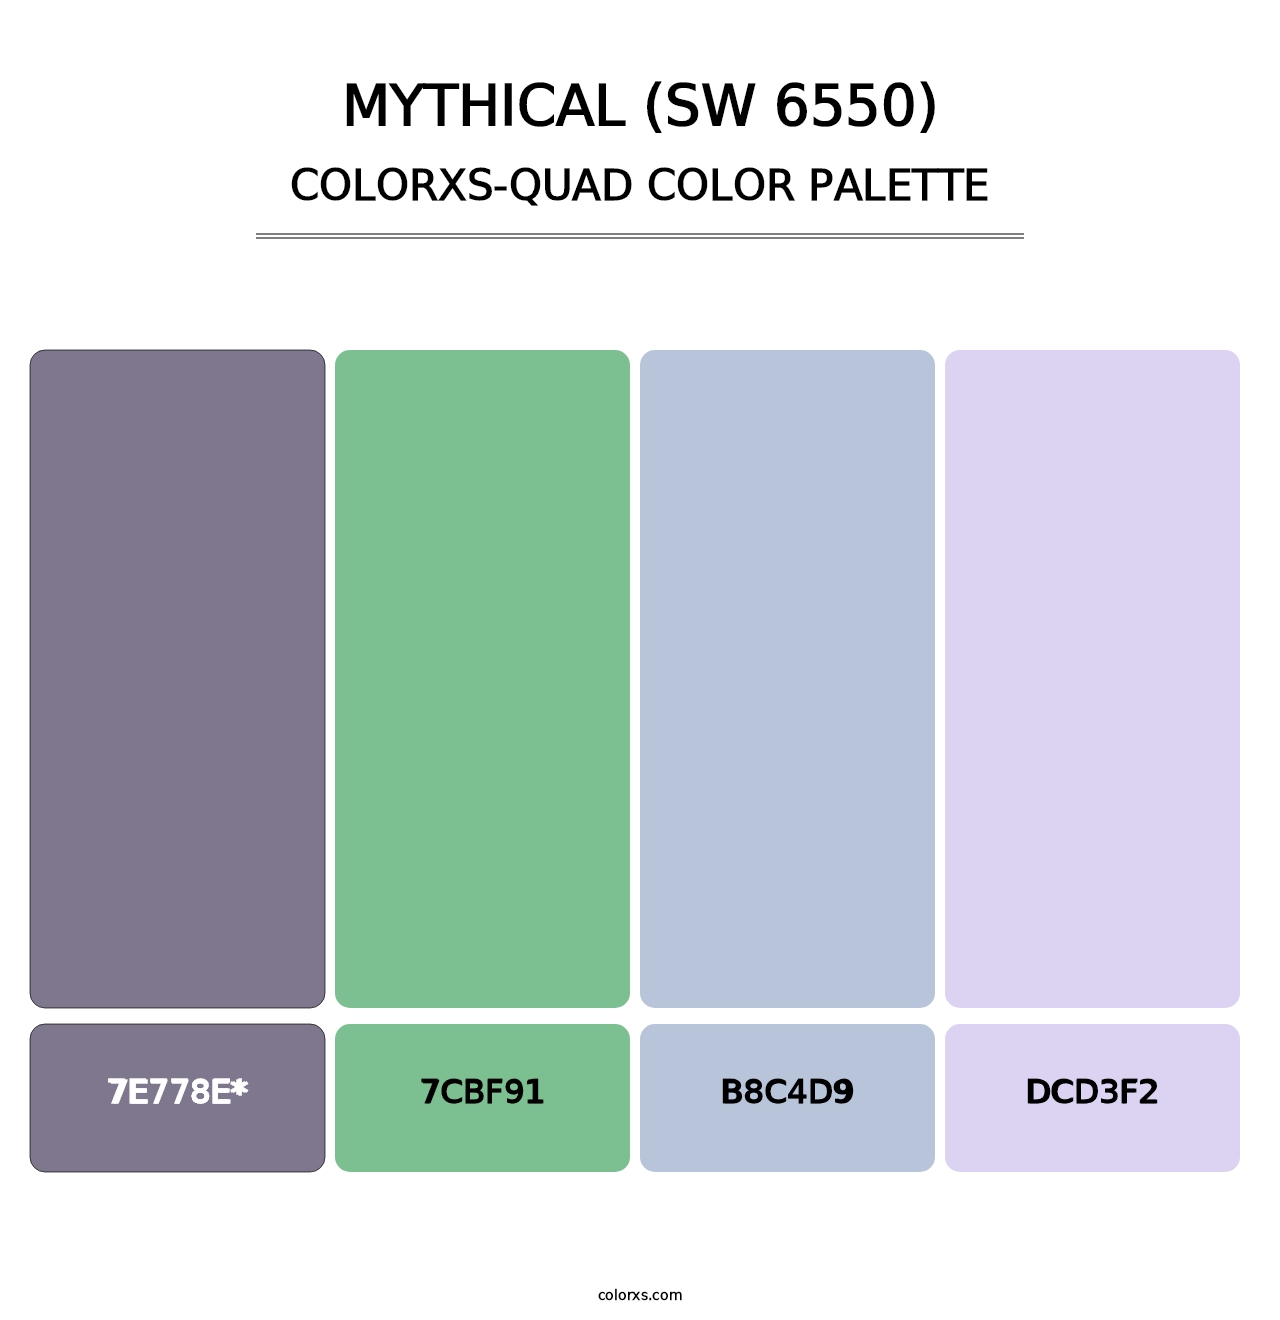 Mythical (SW 6550) - Colorxs Quad Palette